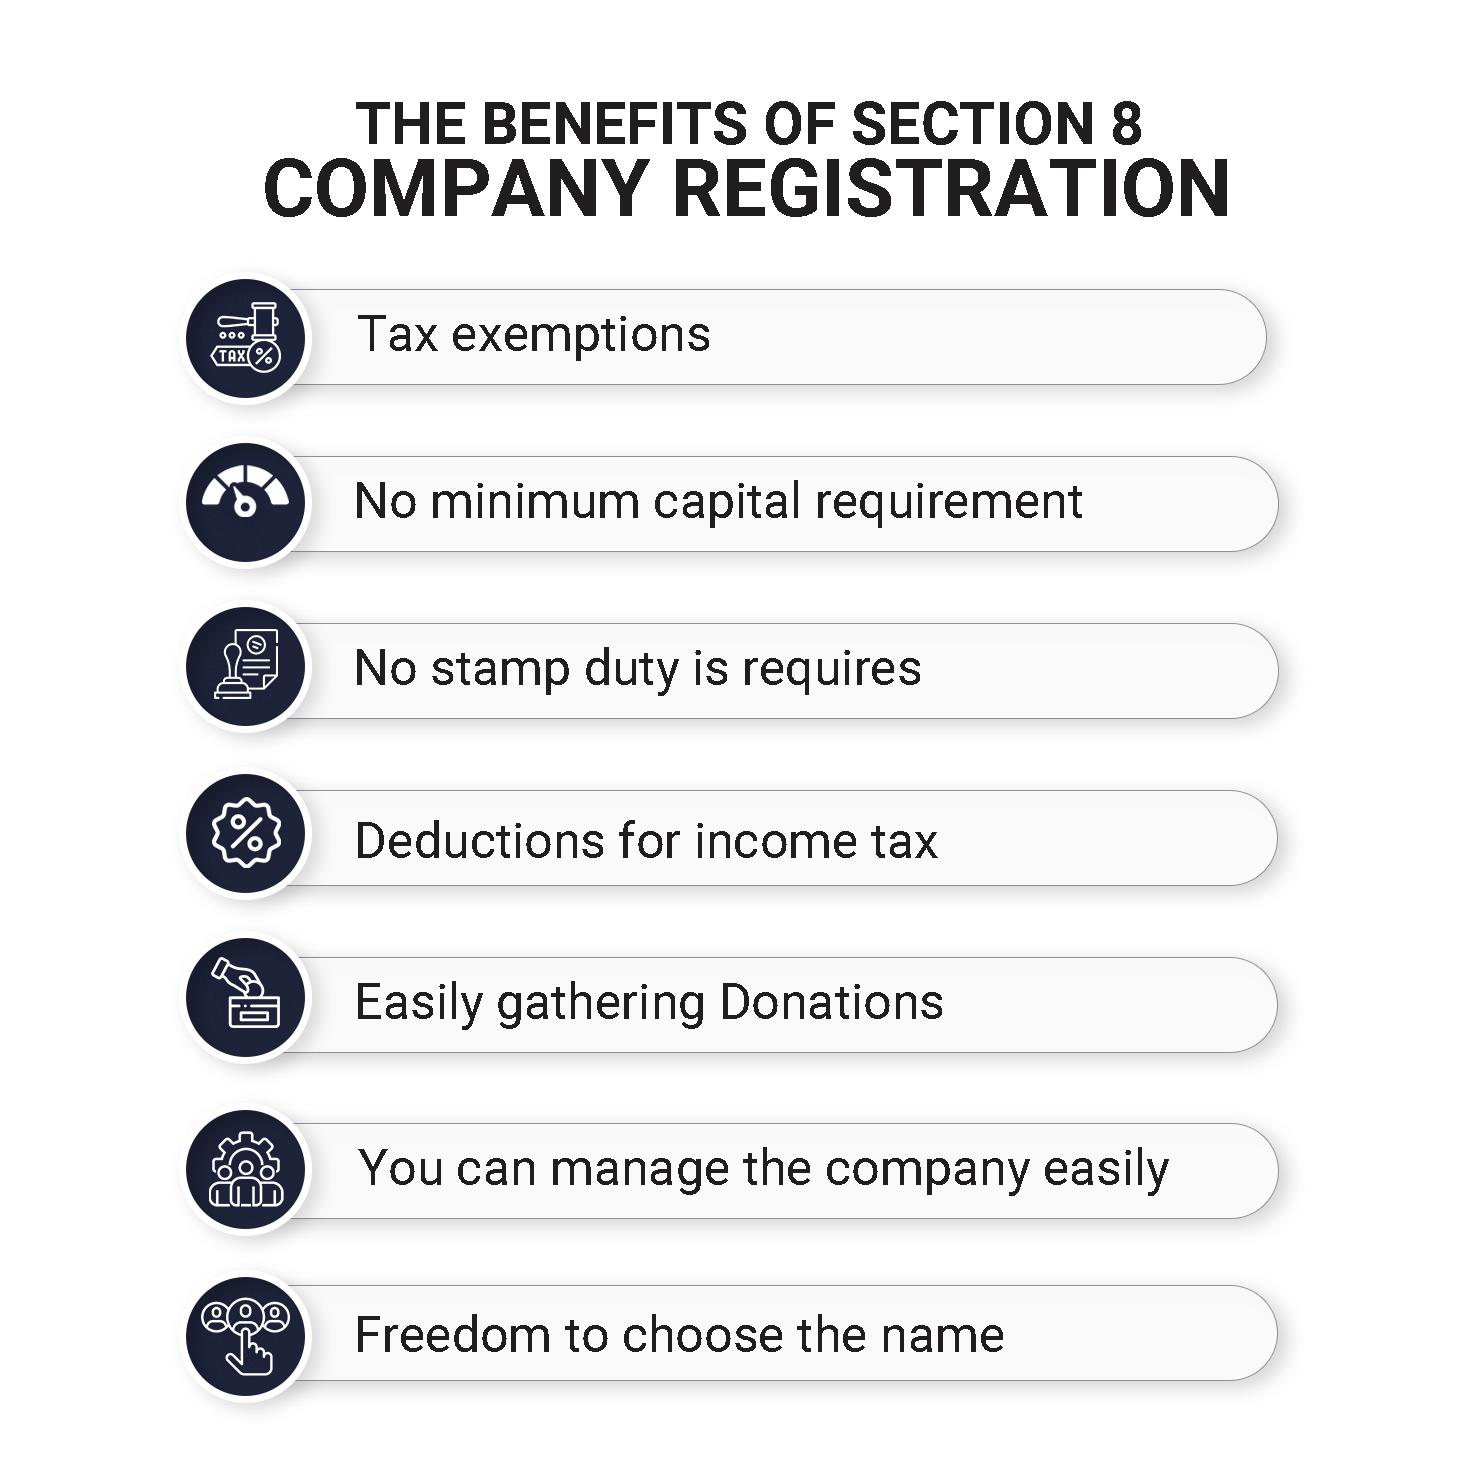 Section 8 Company Benefits